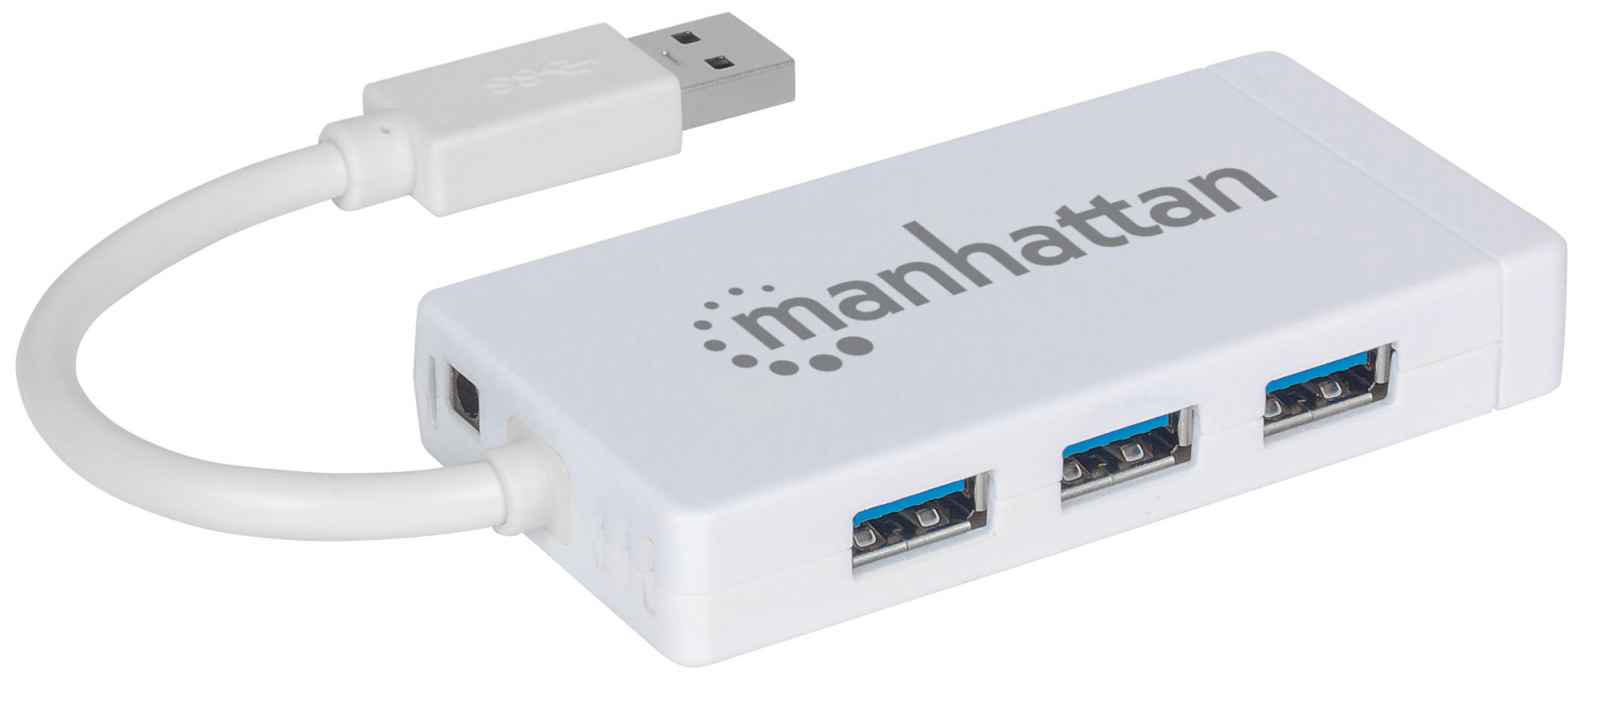 Manhattan Hub de 3 puertos USB 3.0 con Adaptador Gigabit Ethernet